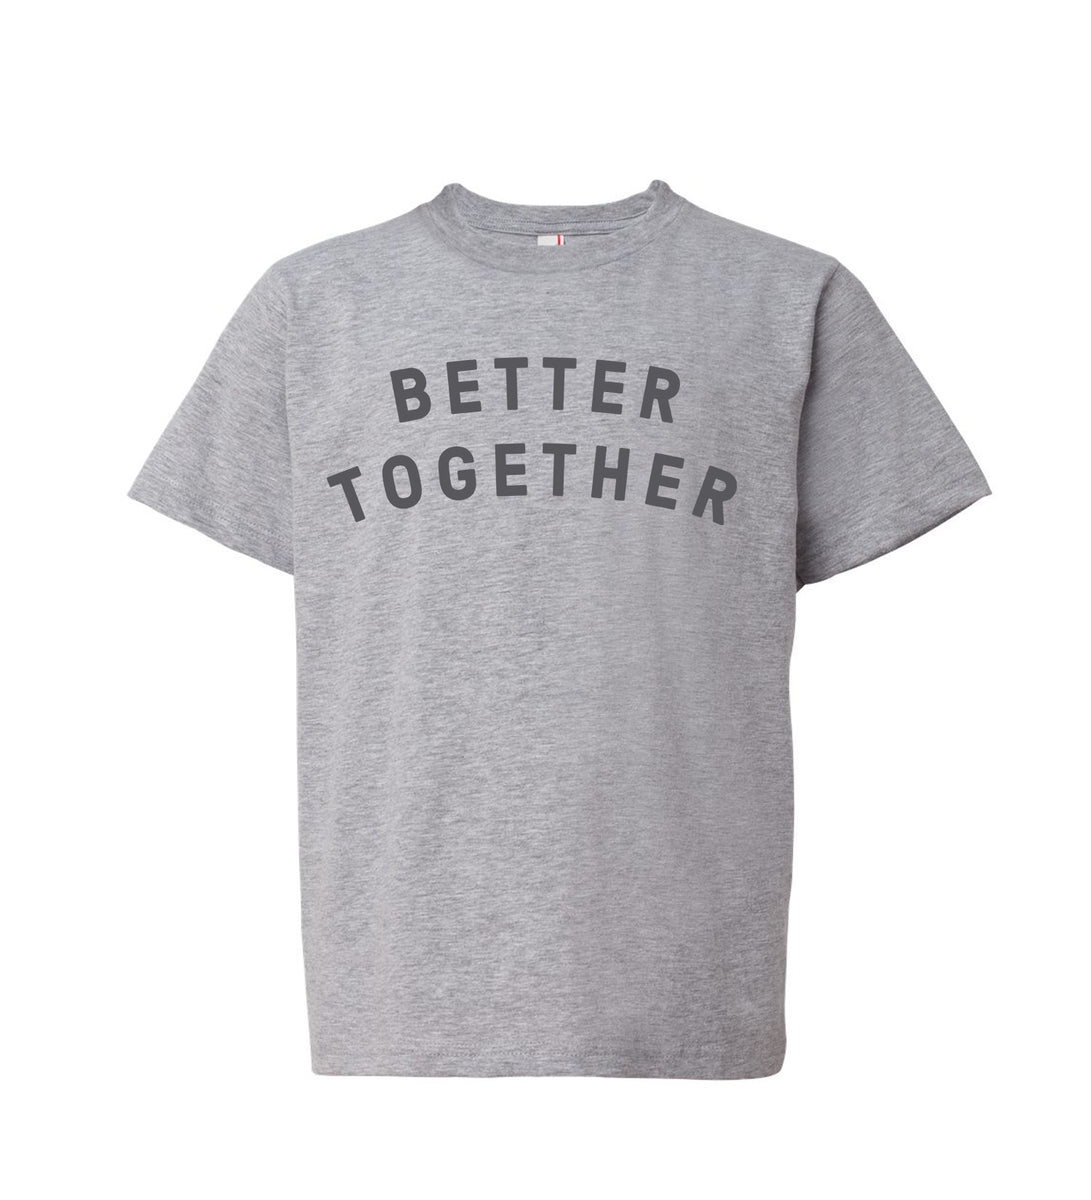 Better Together T-Shirt – Lifeline Children's Services Store